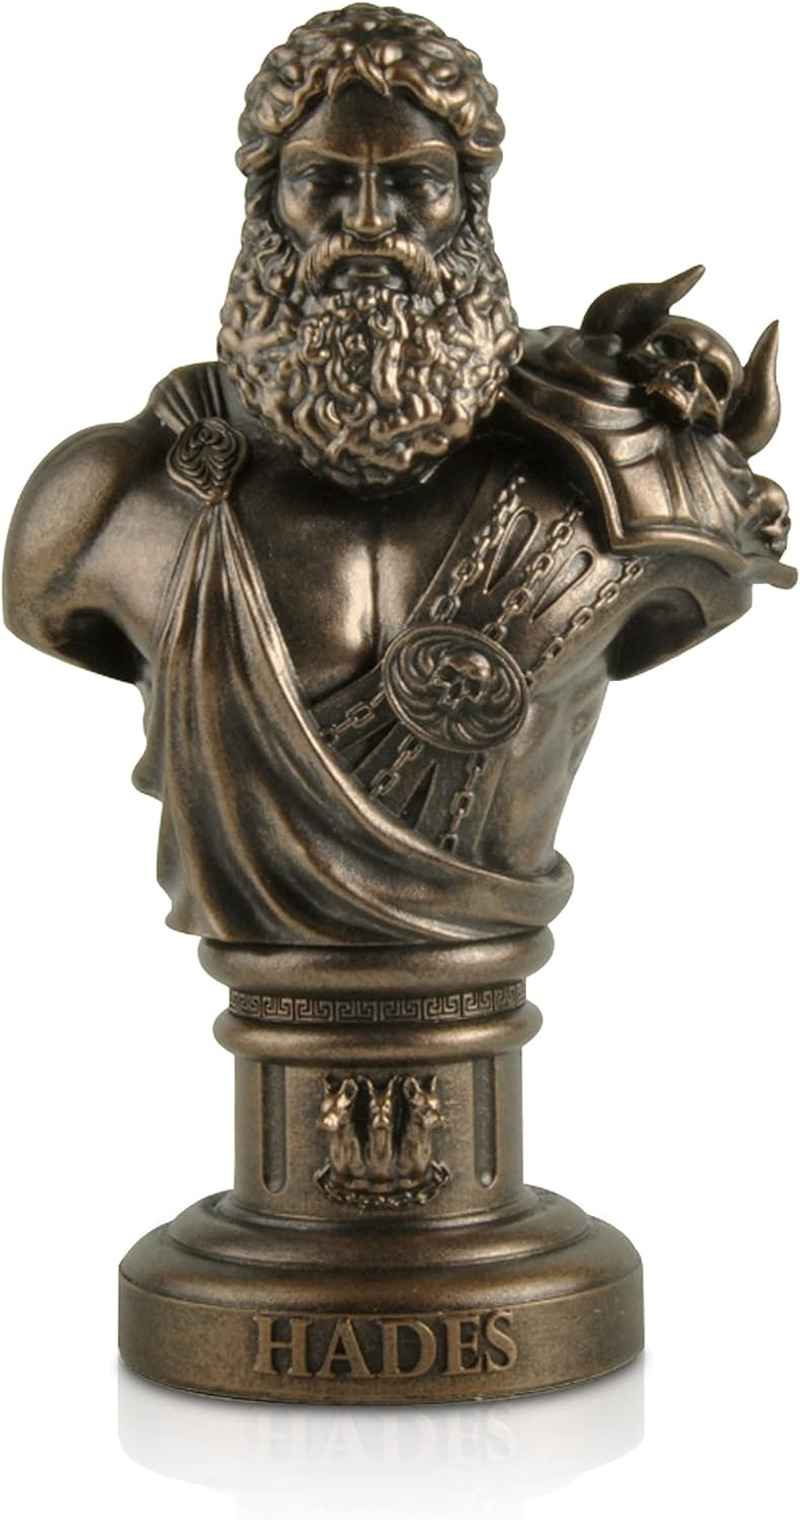 Hades Greek God of the Underworld Bust Statue Figurine Mythology Decor Gifts (Br